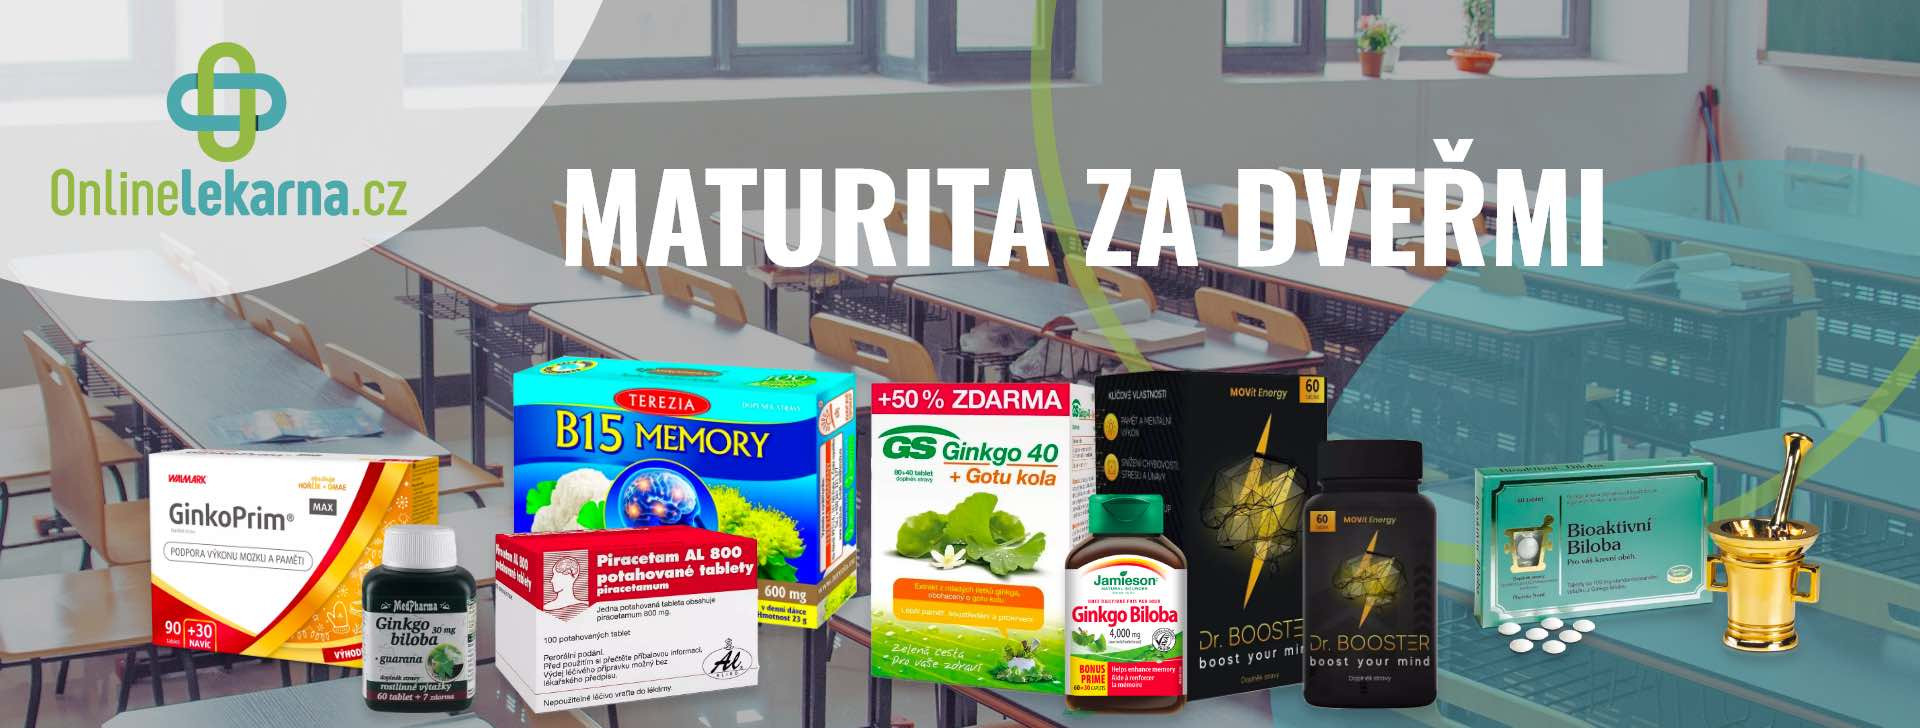 Onlinelekarna.cz | Maturita za dveřmi